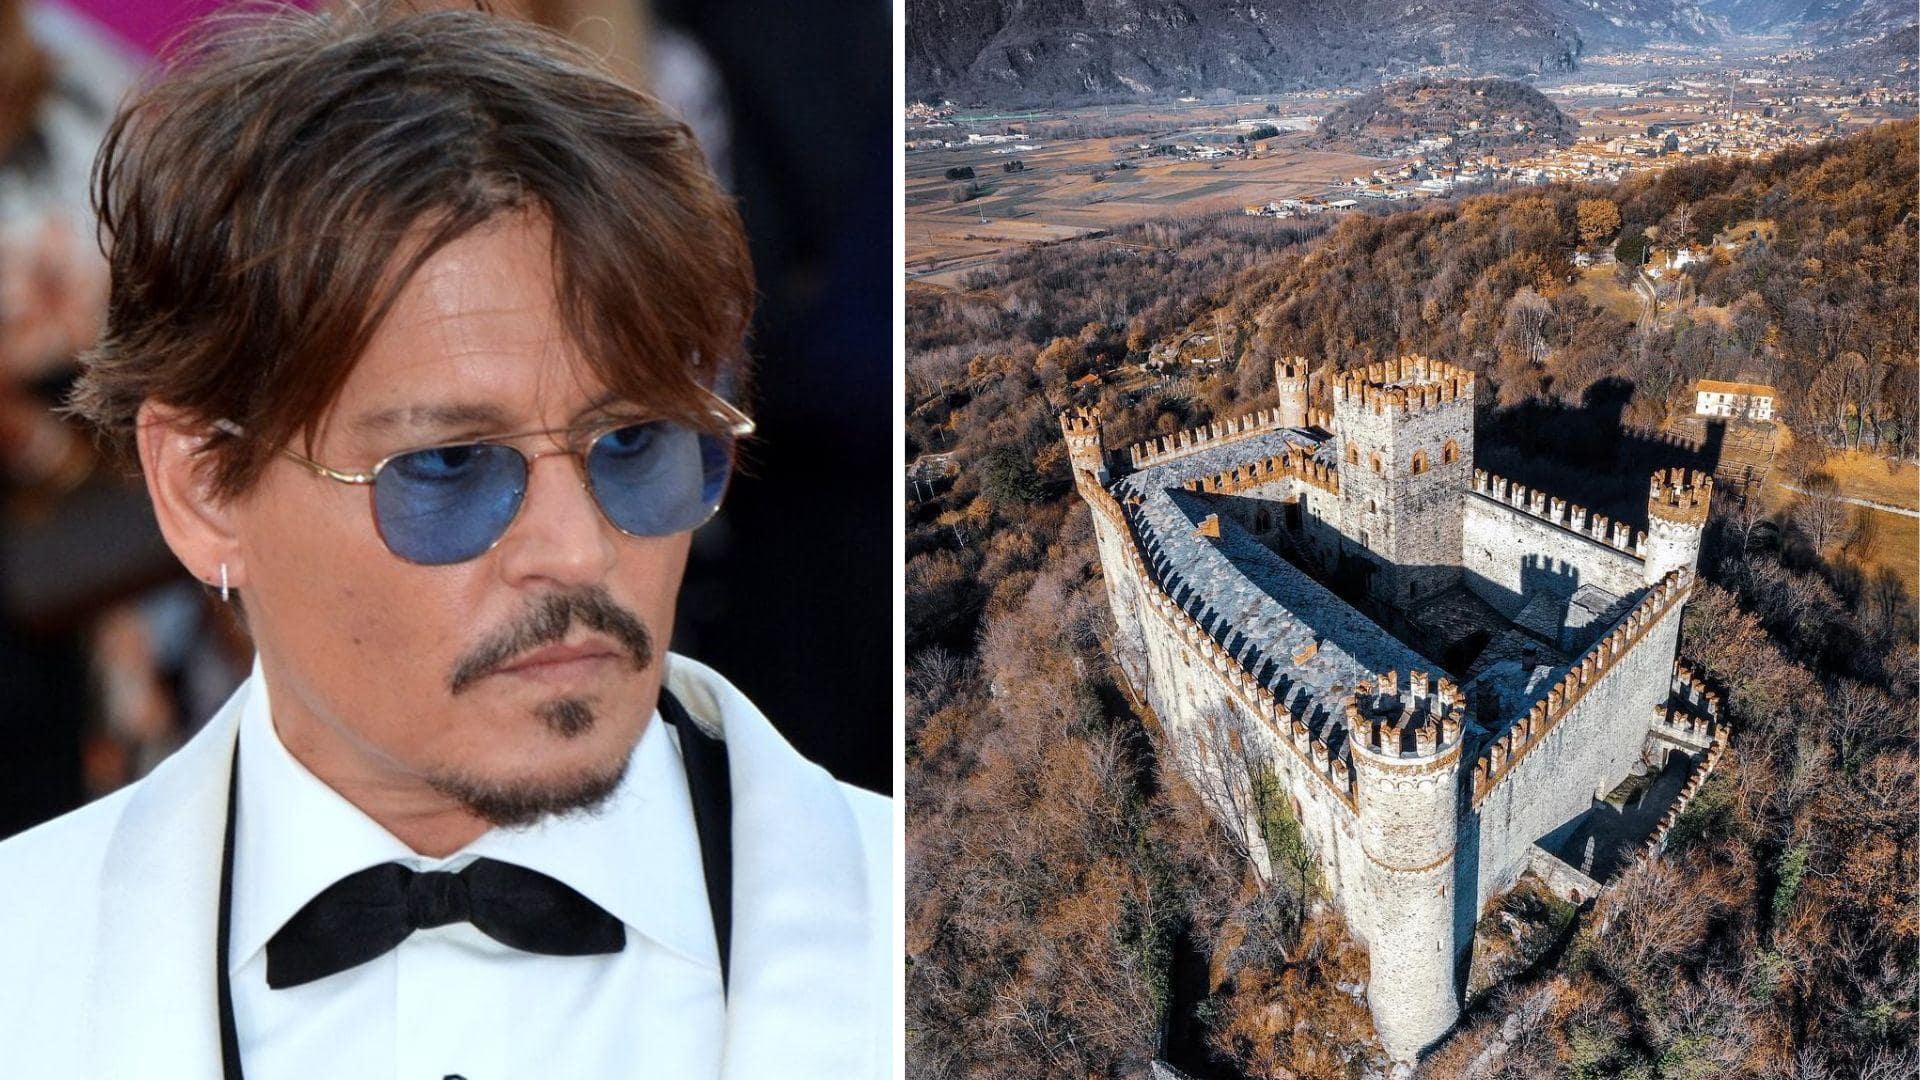 Johnny Depp's gaze set on $4M historic Italian castle: Report